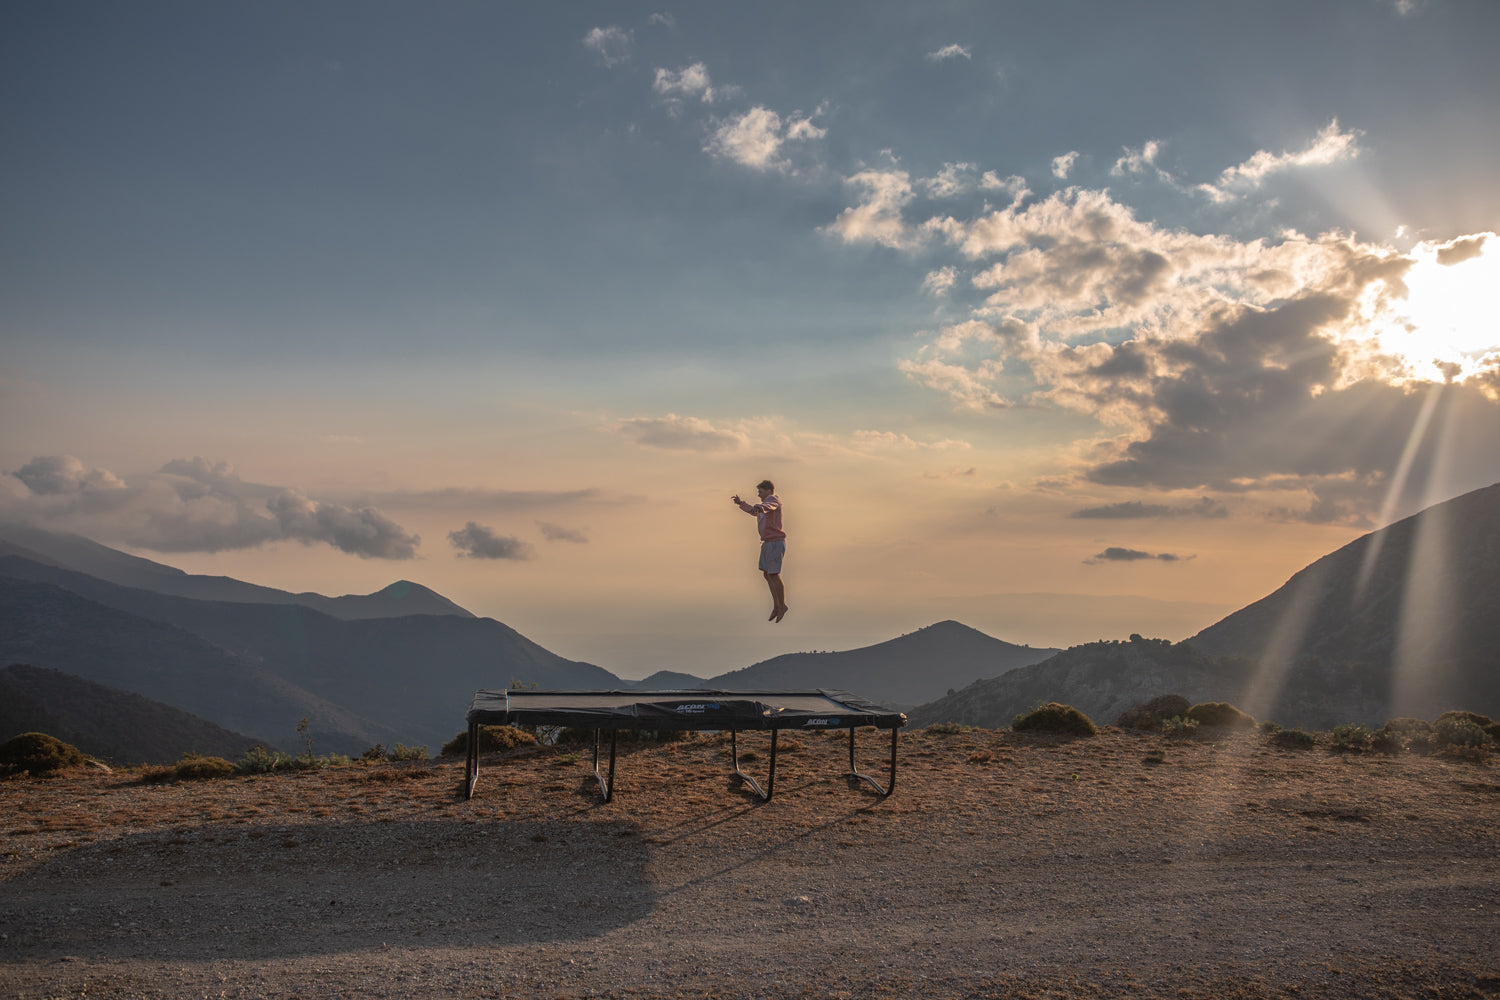 A guy jumping on an ACON rectangular trampoline in a desert